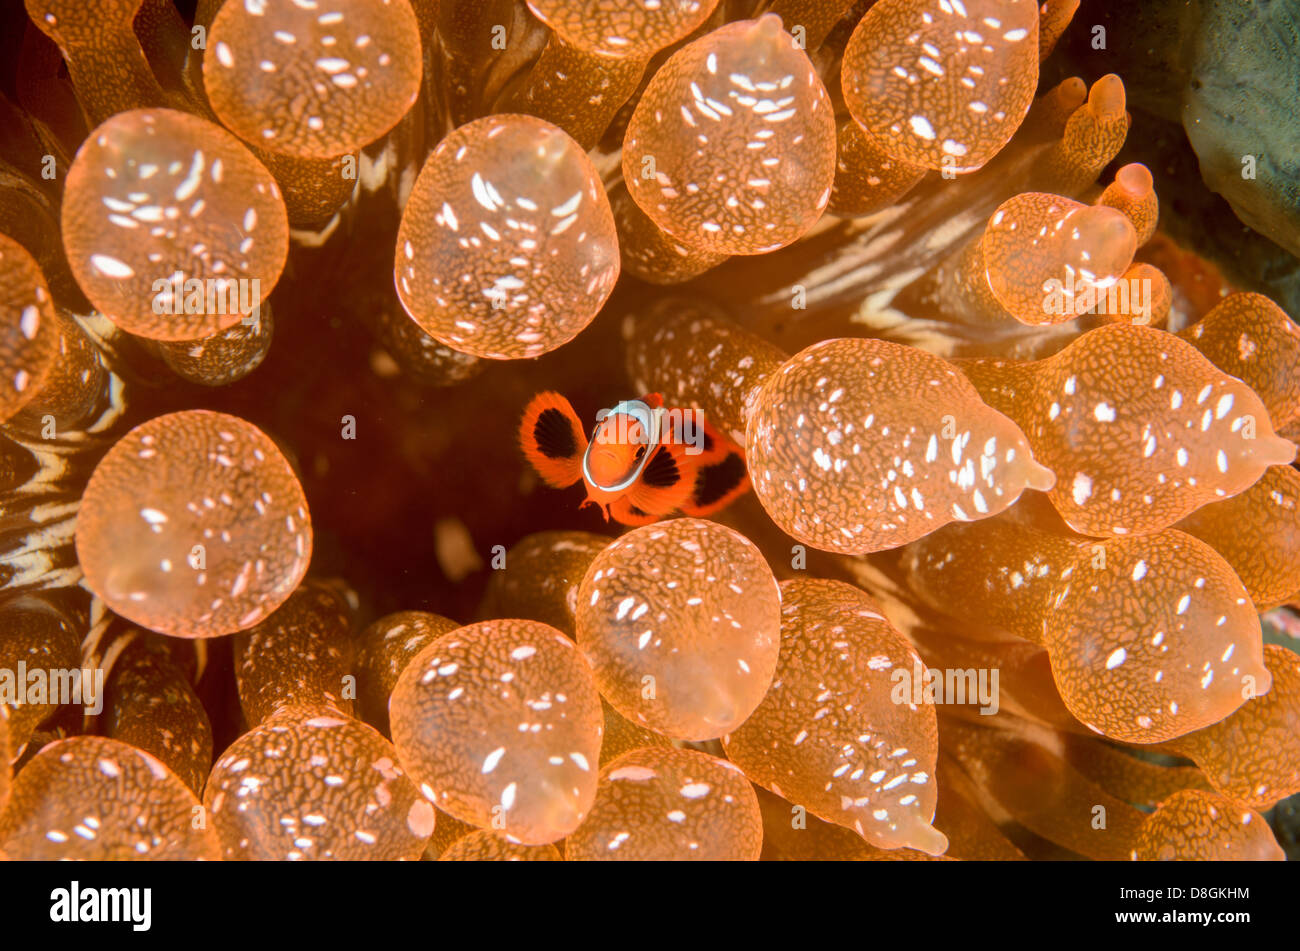 Juvenile spine-cheeked anemonefish, Premnas biaculeatus, in bubble-tip anemone, Entacmaea quadricolor. Stock Photo